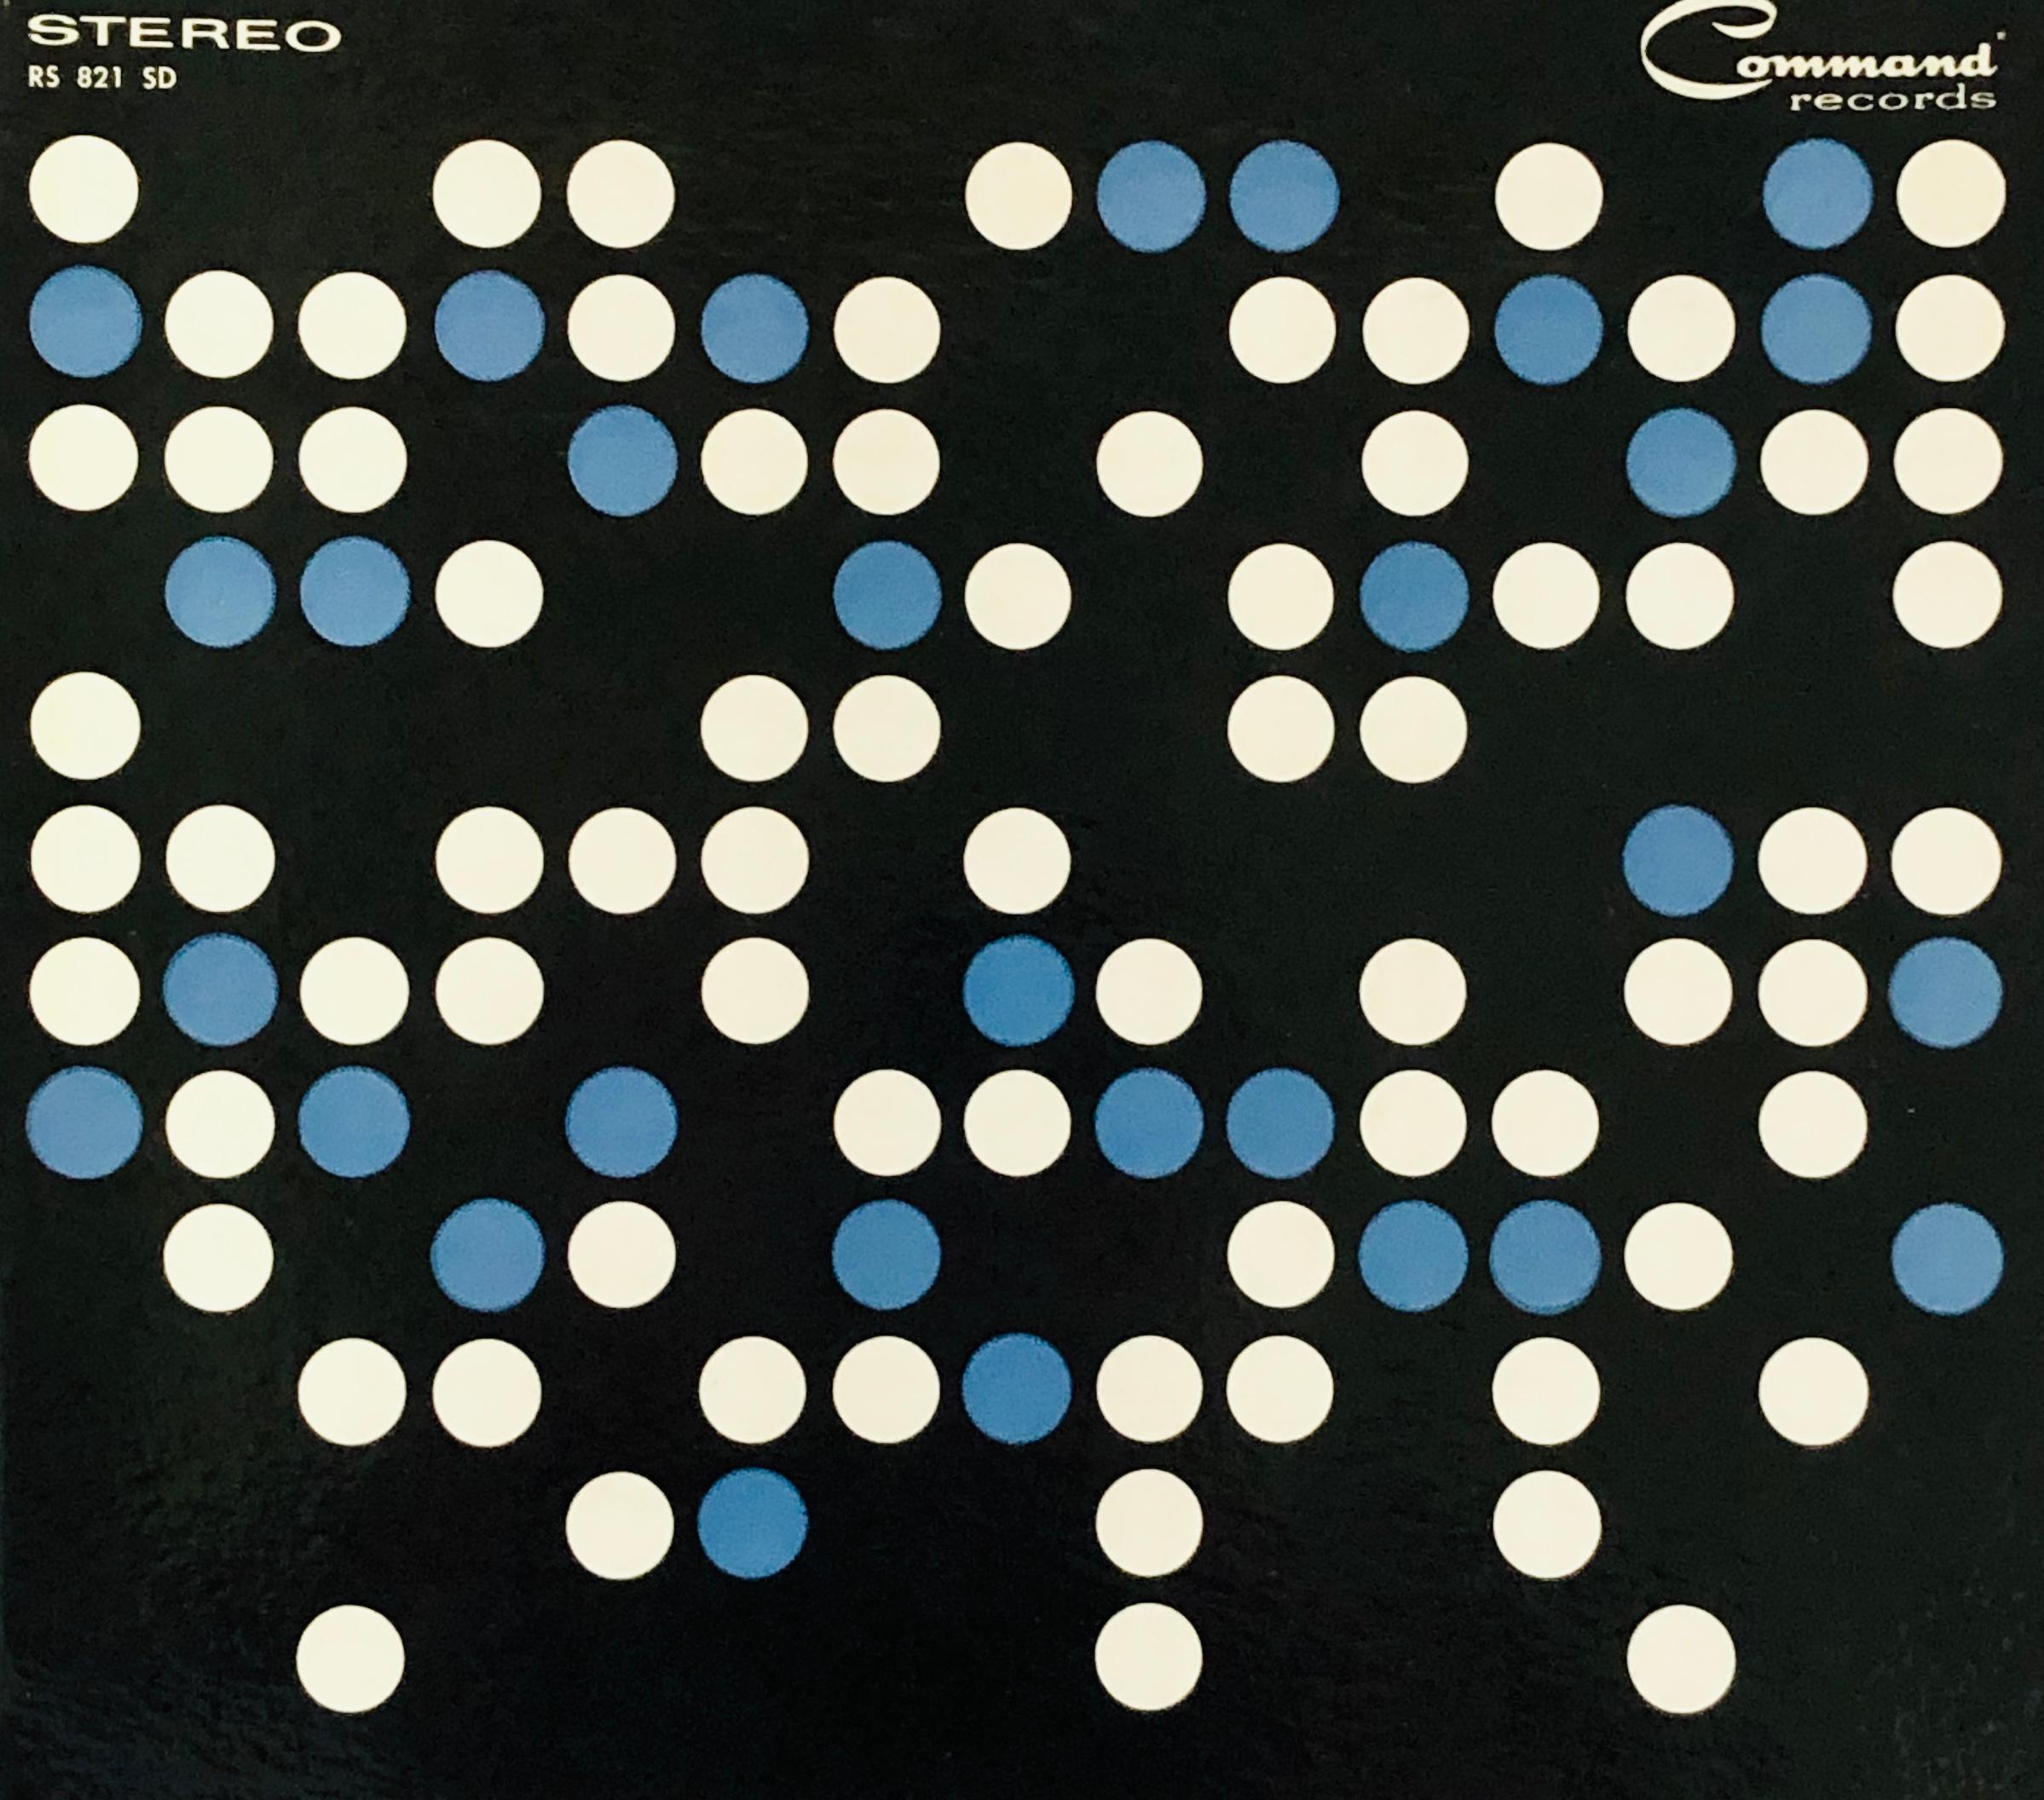 Josef Albers vinyl record art (1950s Albers) 